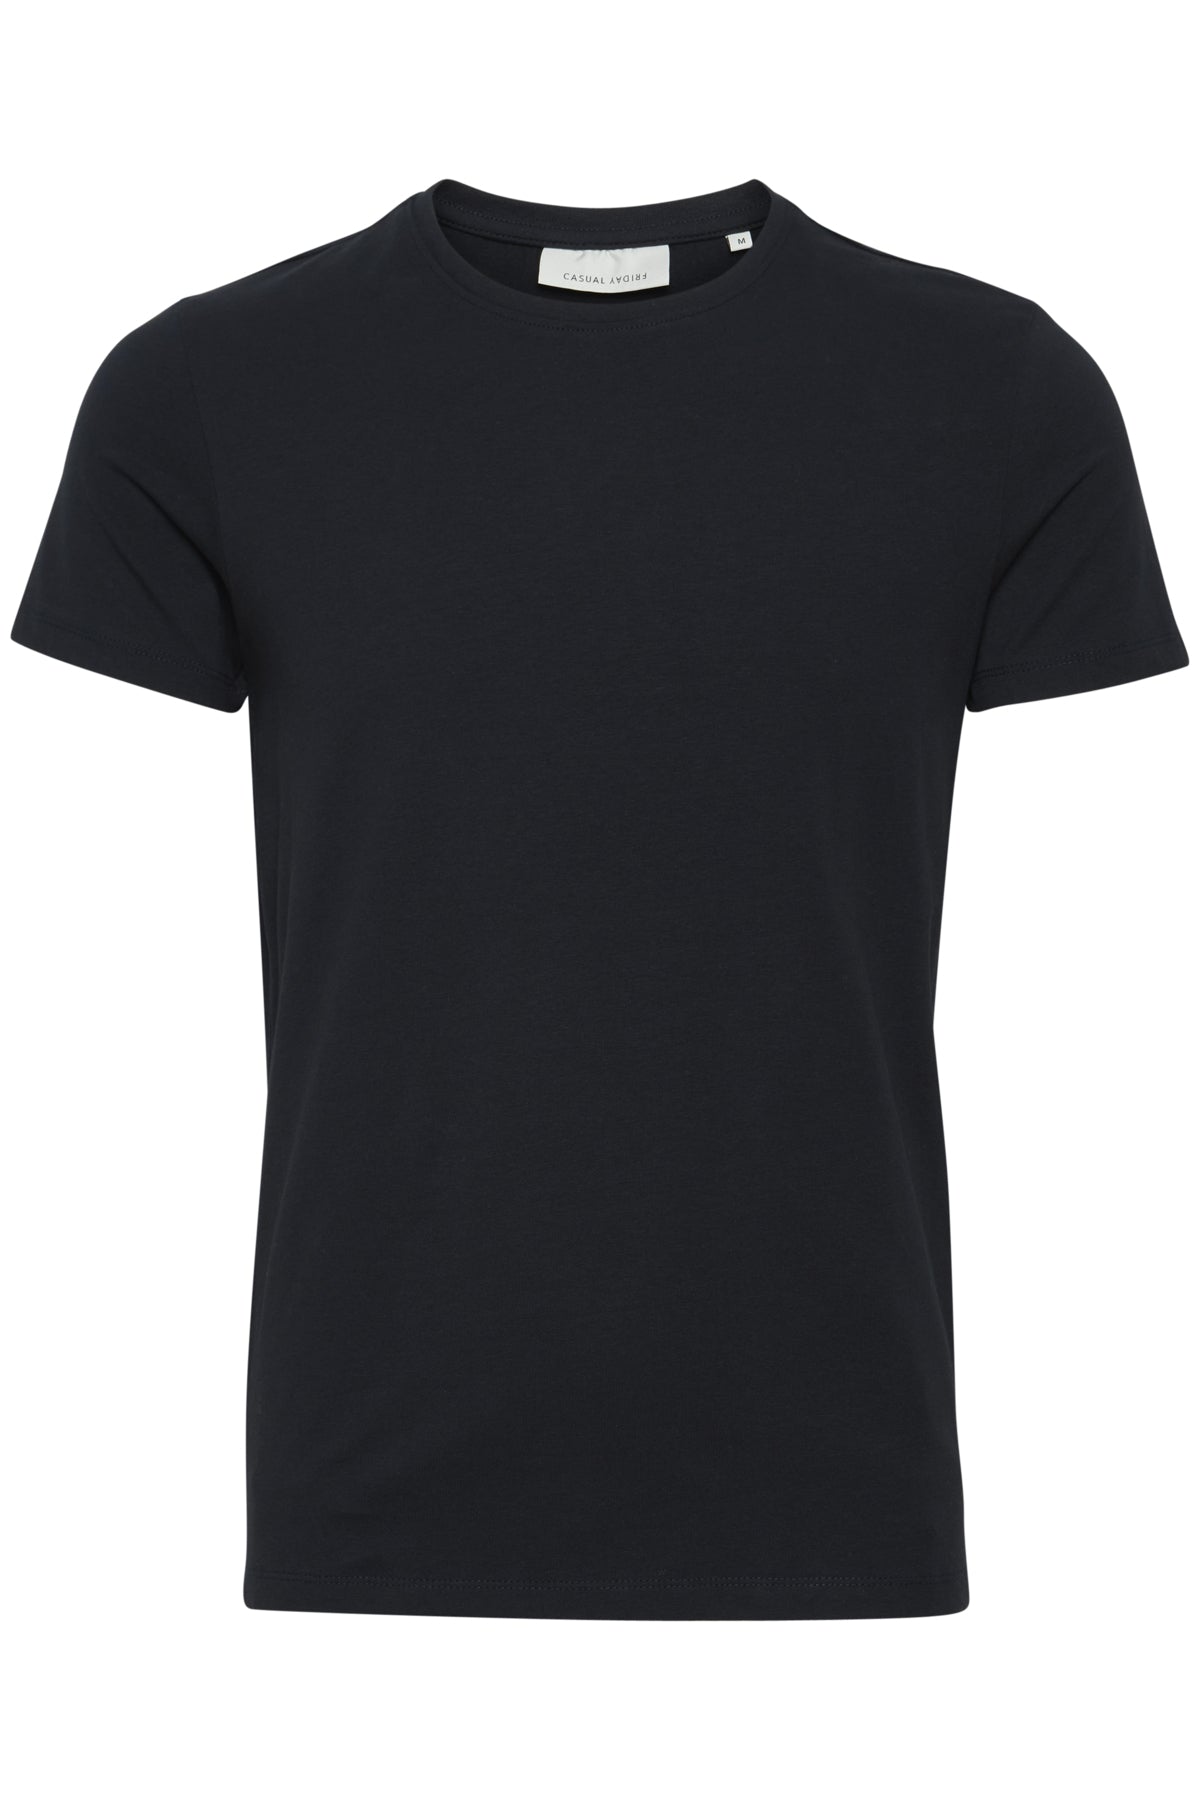 David Crew Neck T-shirt - Black - The Sons online